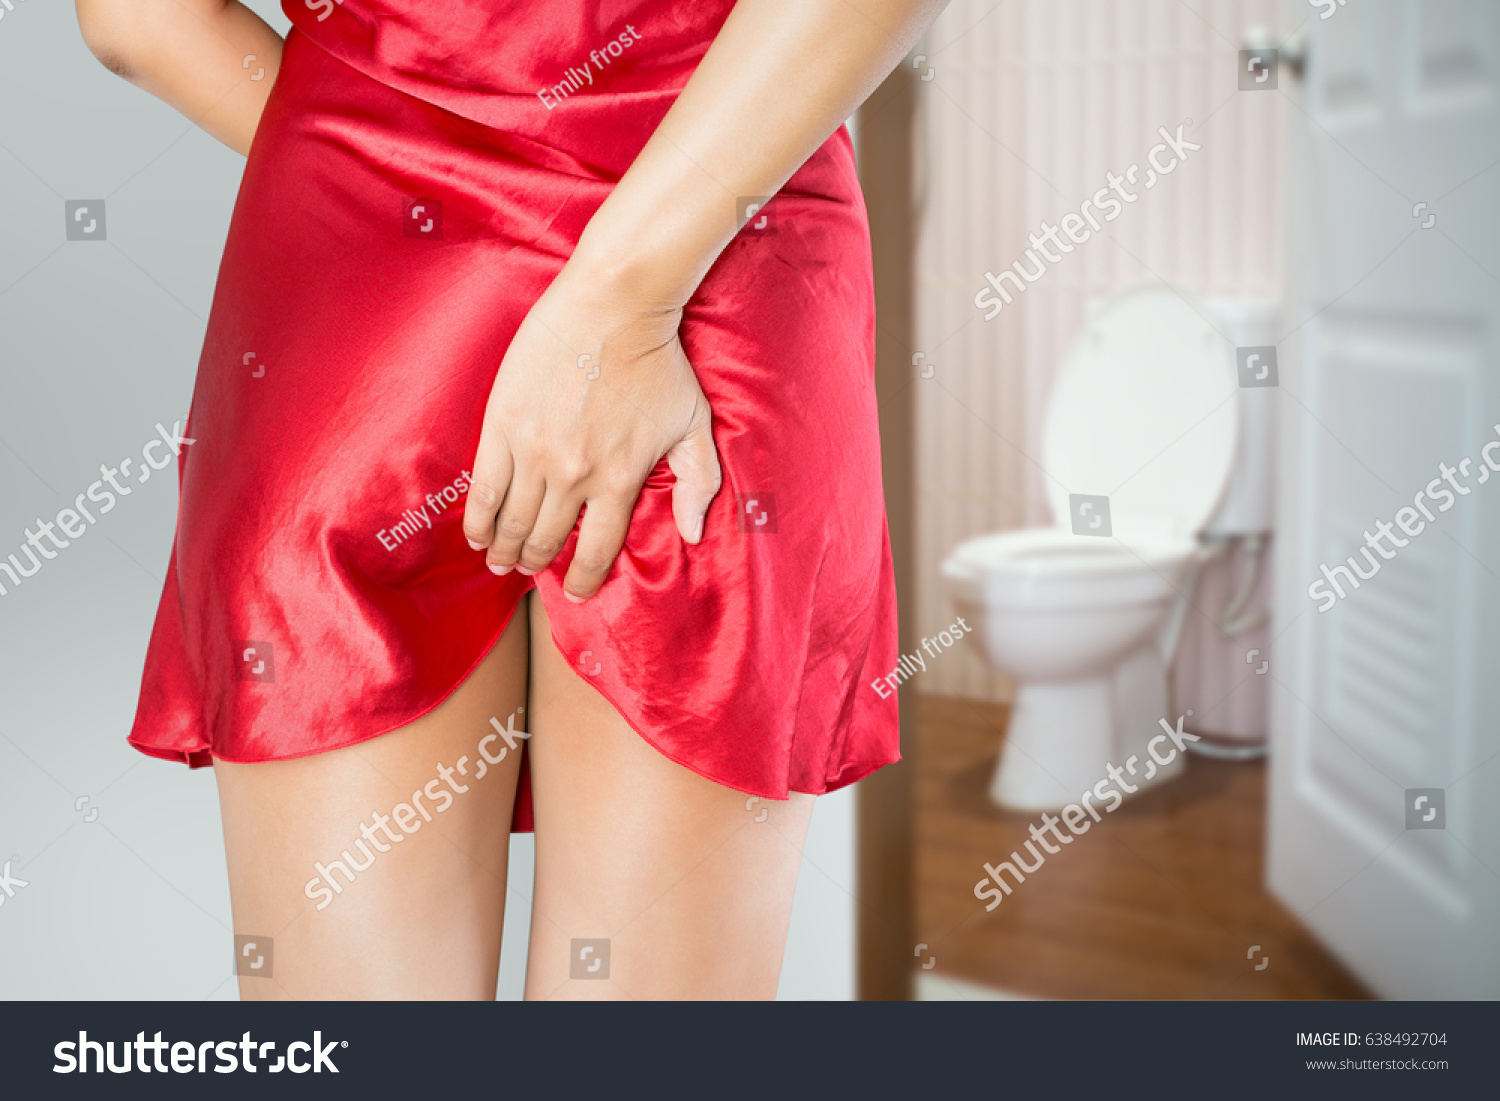 People Has Diarrhea Holding His Bum Stock Photo 638492704 Shutterstock